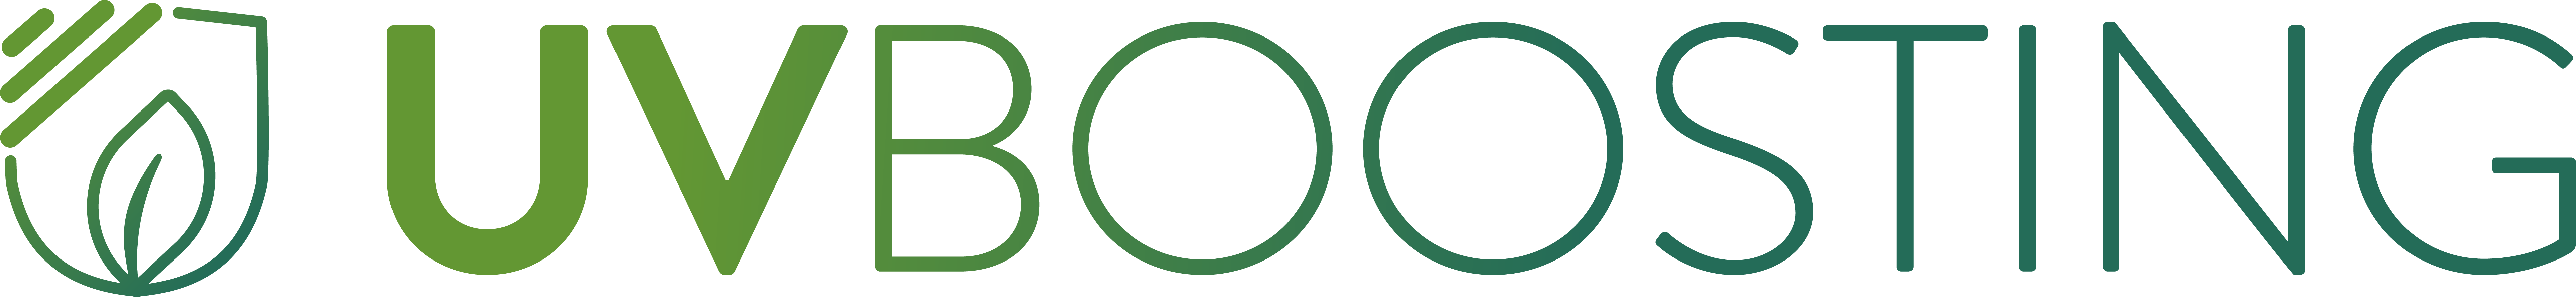 UV-boosting-avec-Wm-Presta-logo-vert